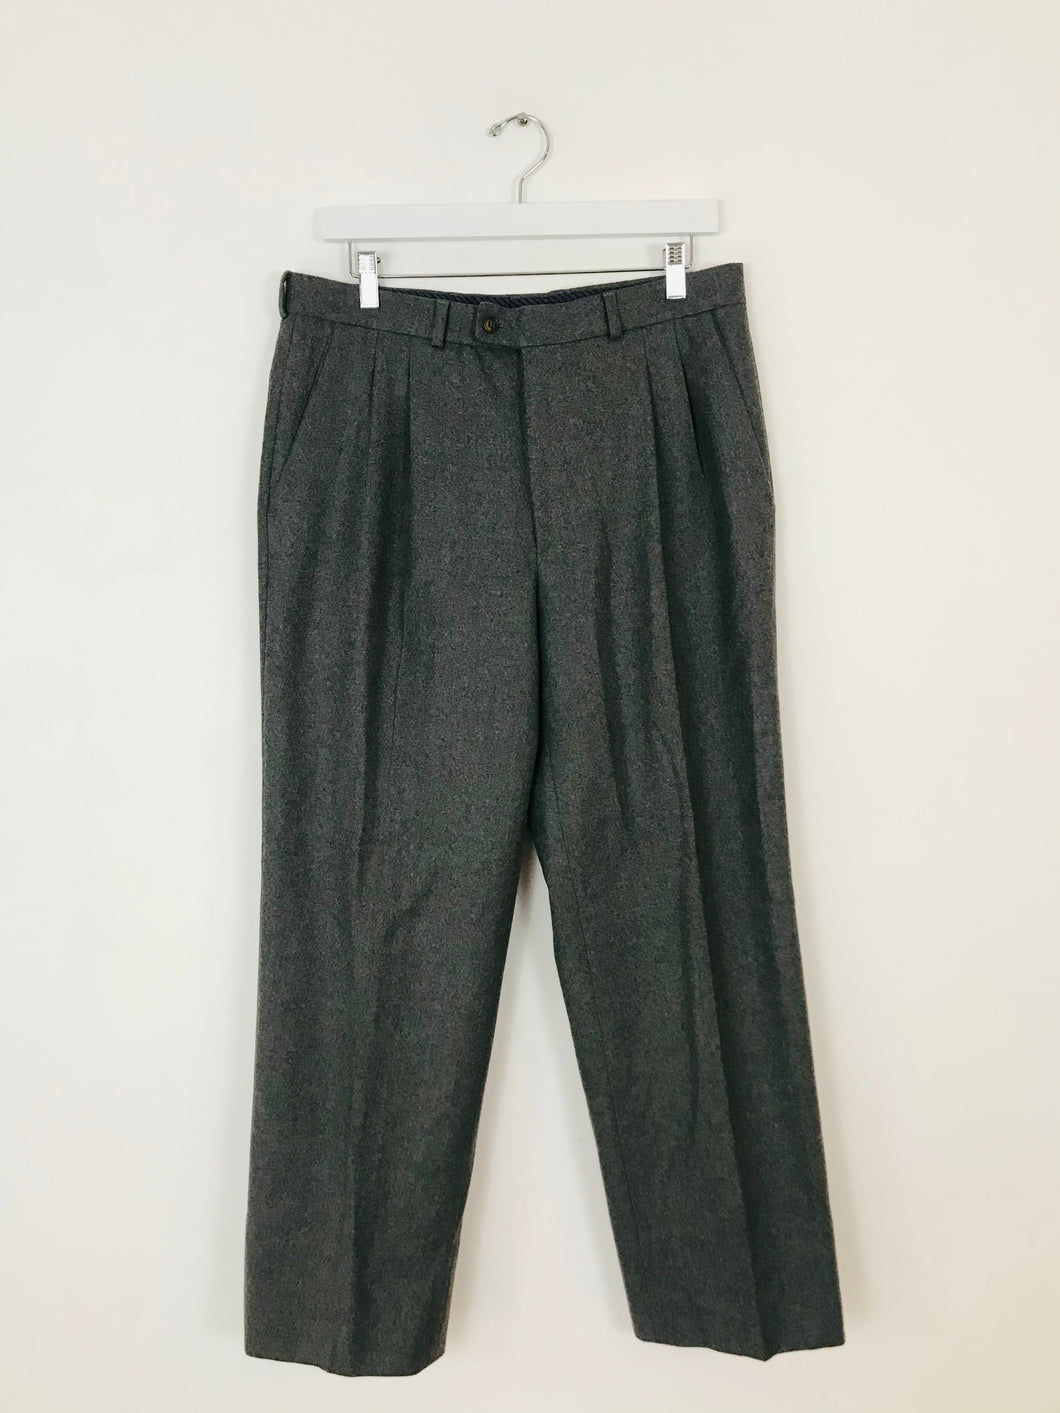 Cerruti 1881 Men’s Wool Straight Suit Trousers | 34 | Grey